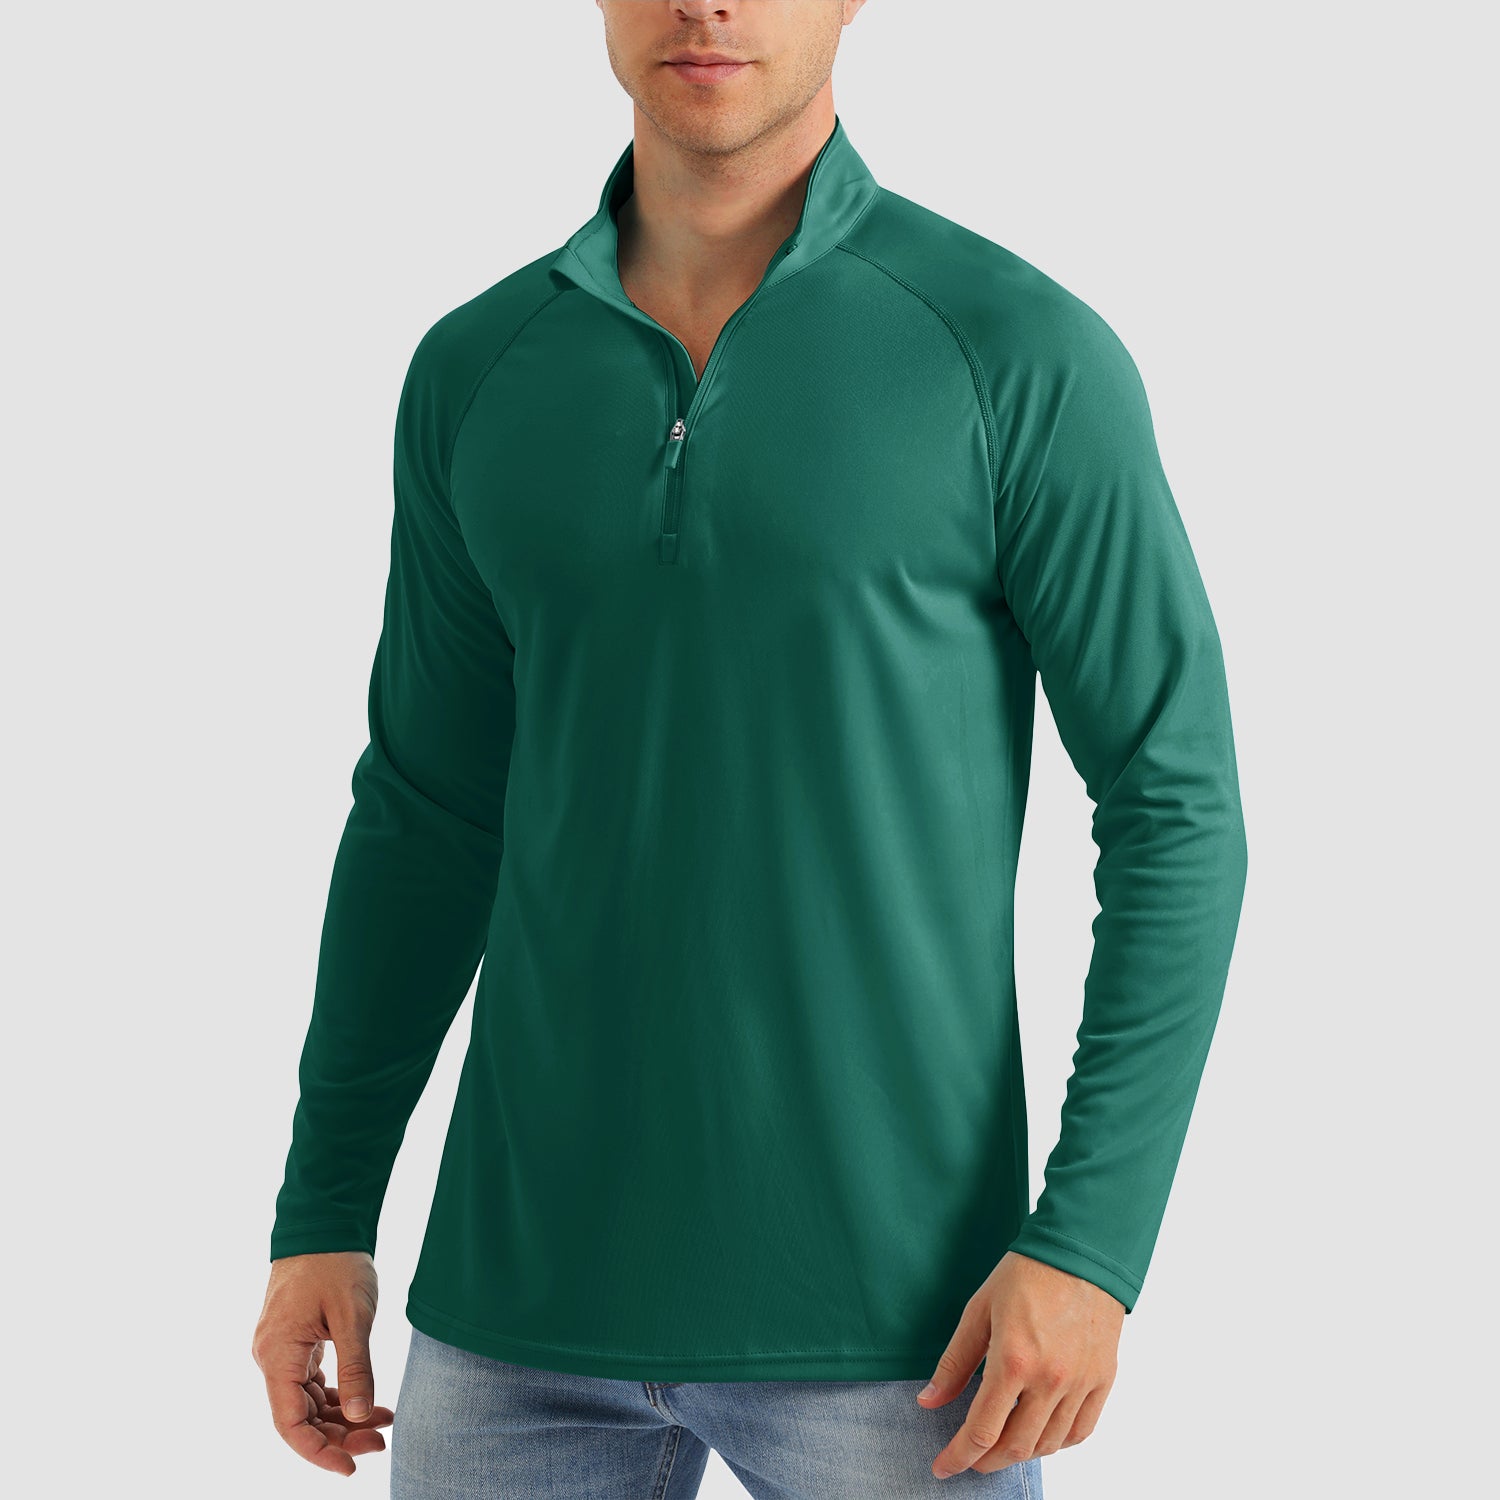 Men's Long Sleeve Shirt UPF 50 Quick Dry for Outdoor Sports, Jade Green / XL